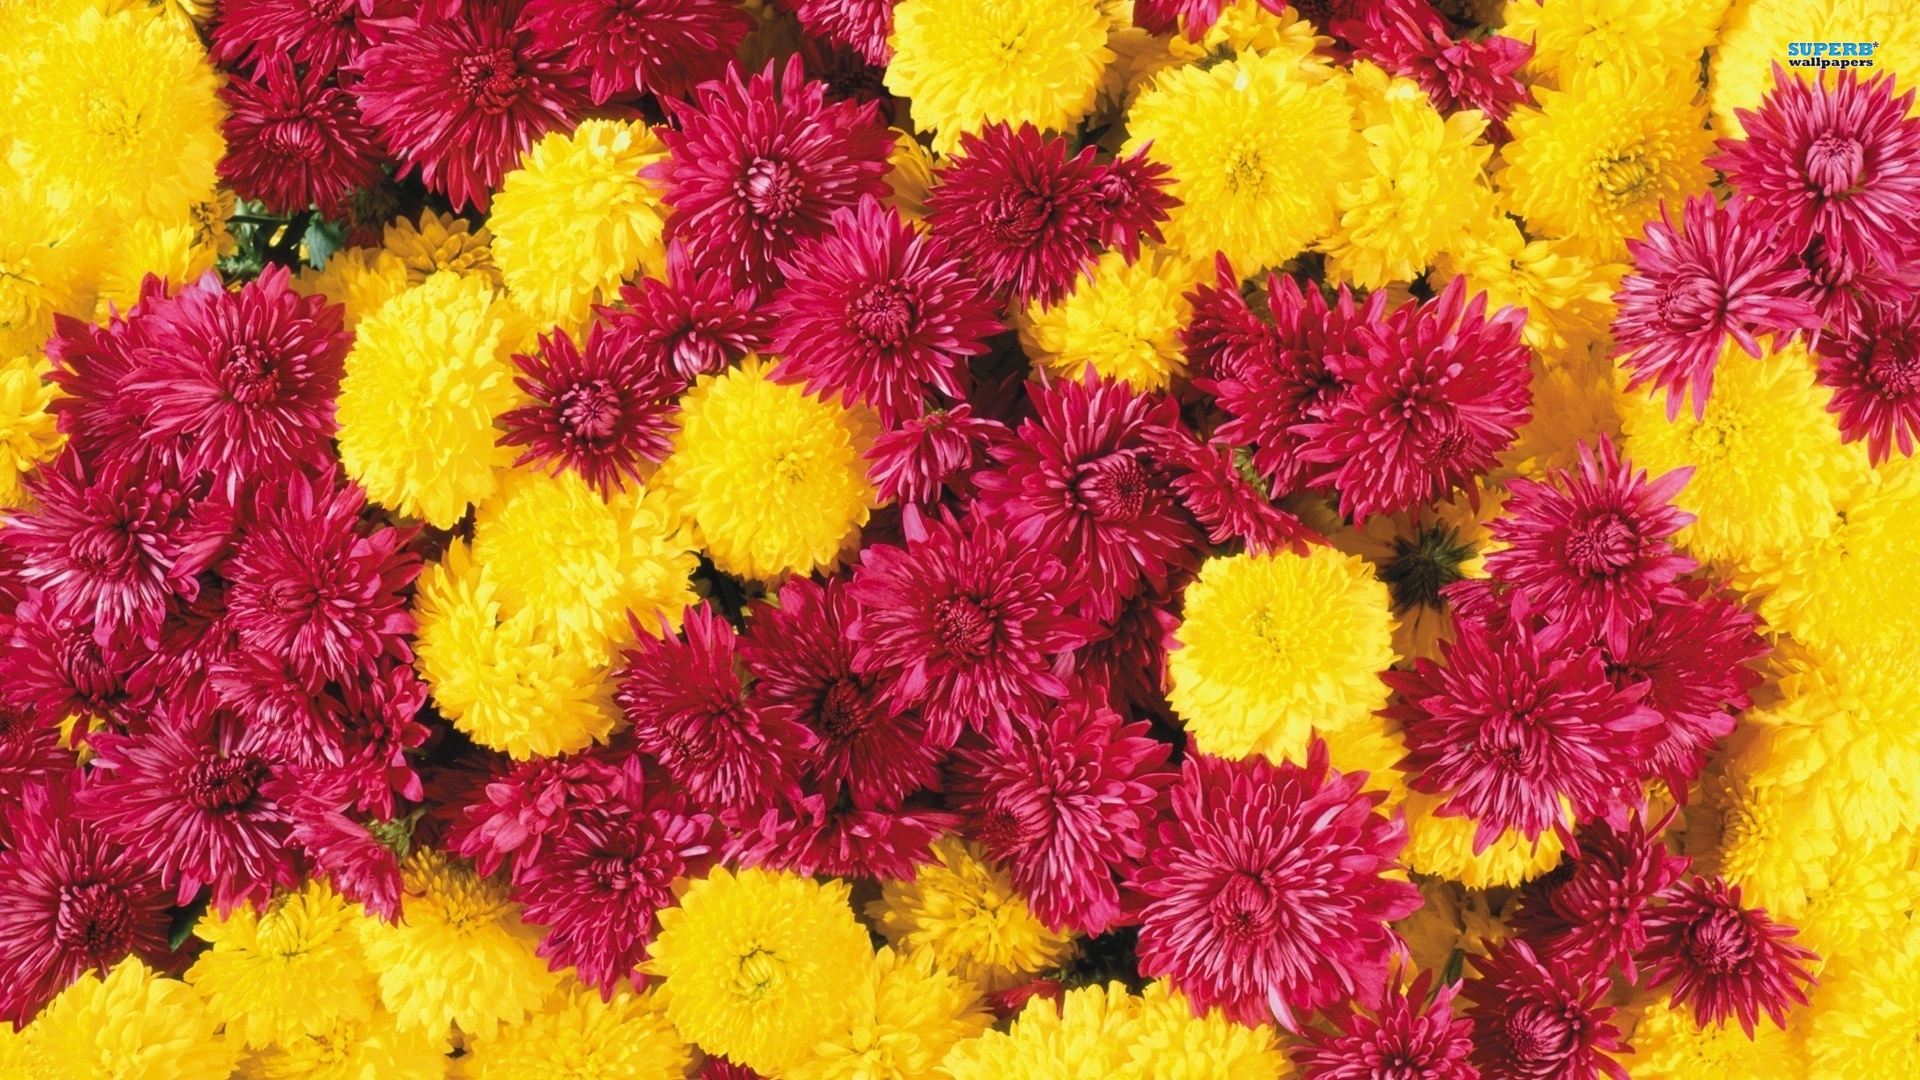 History of Chrysanthemums: Chrysanthemums